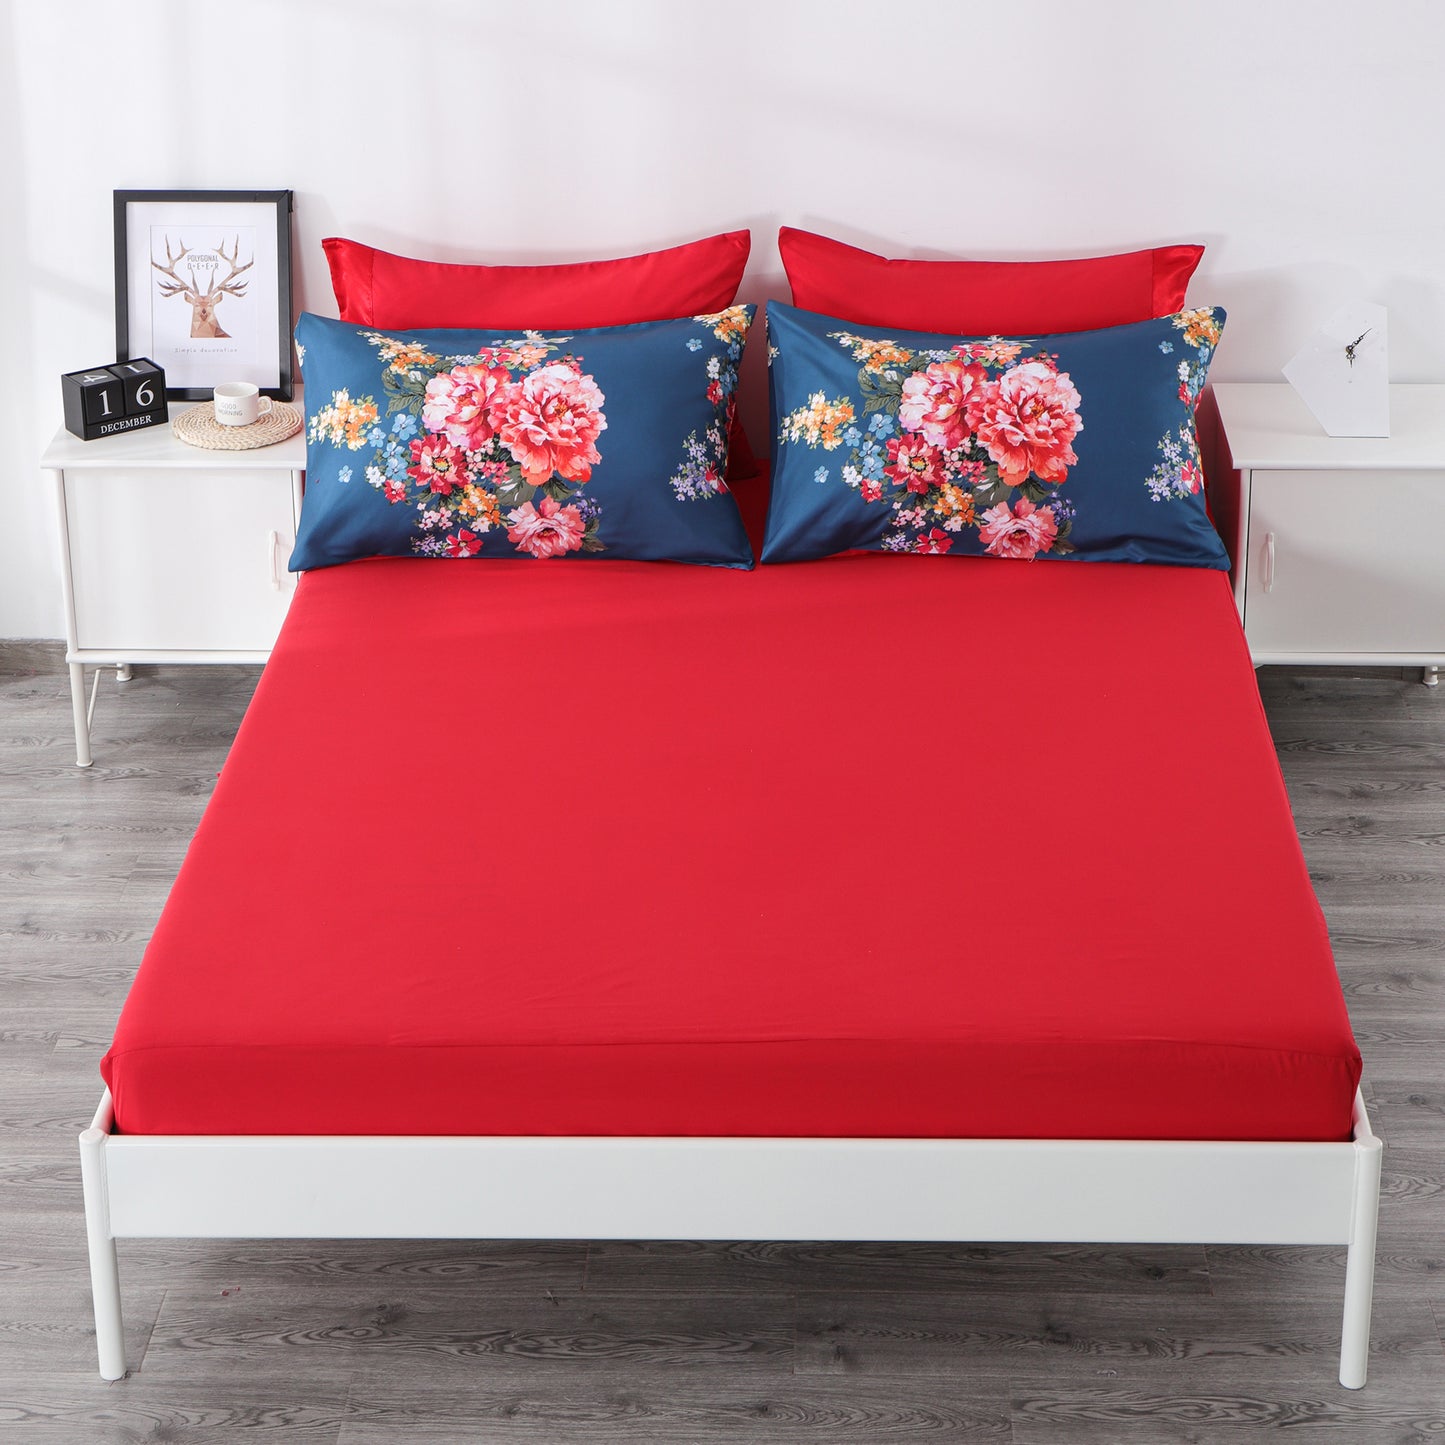 6 Piece Bed Sheet set-Red Rose